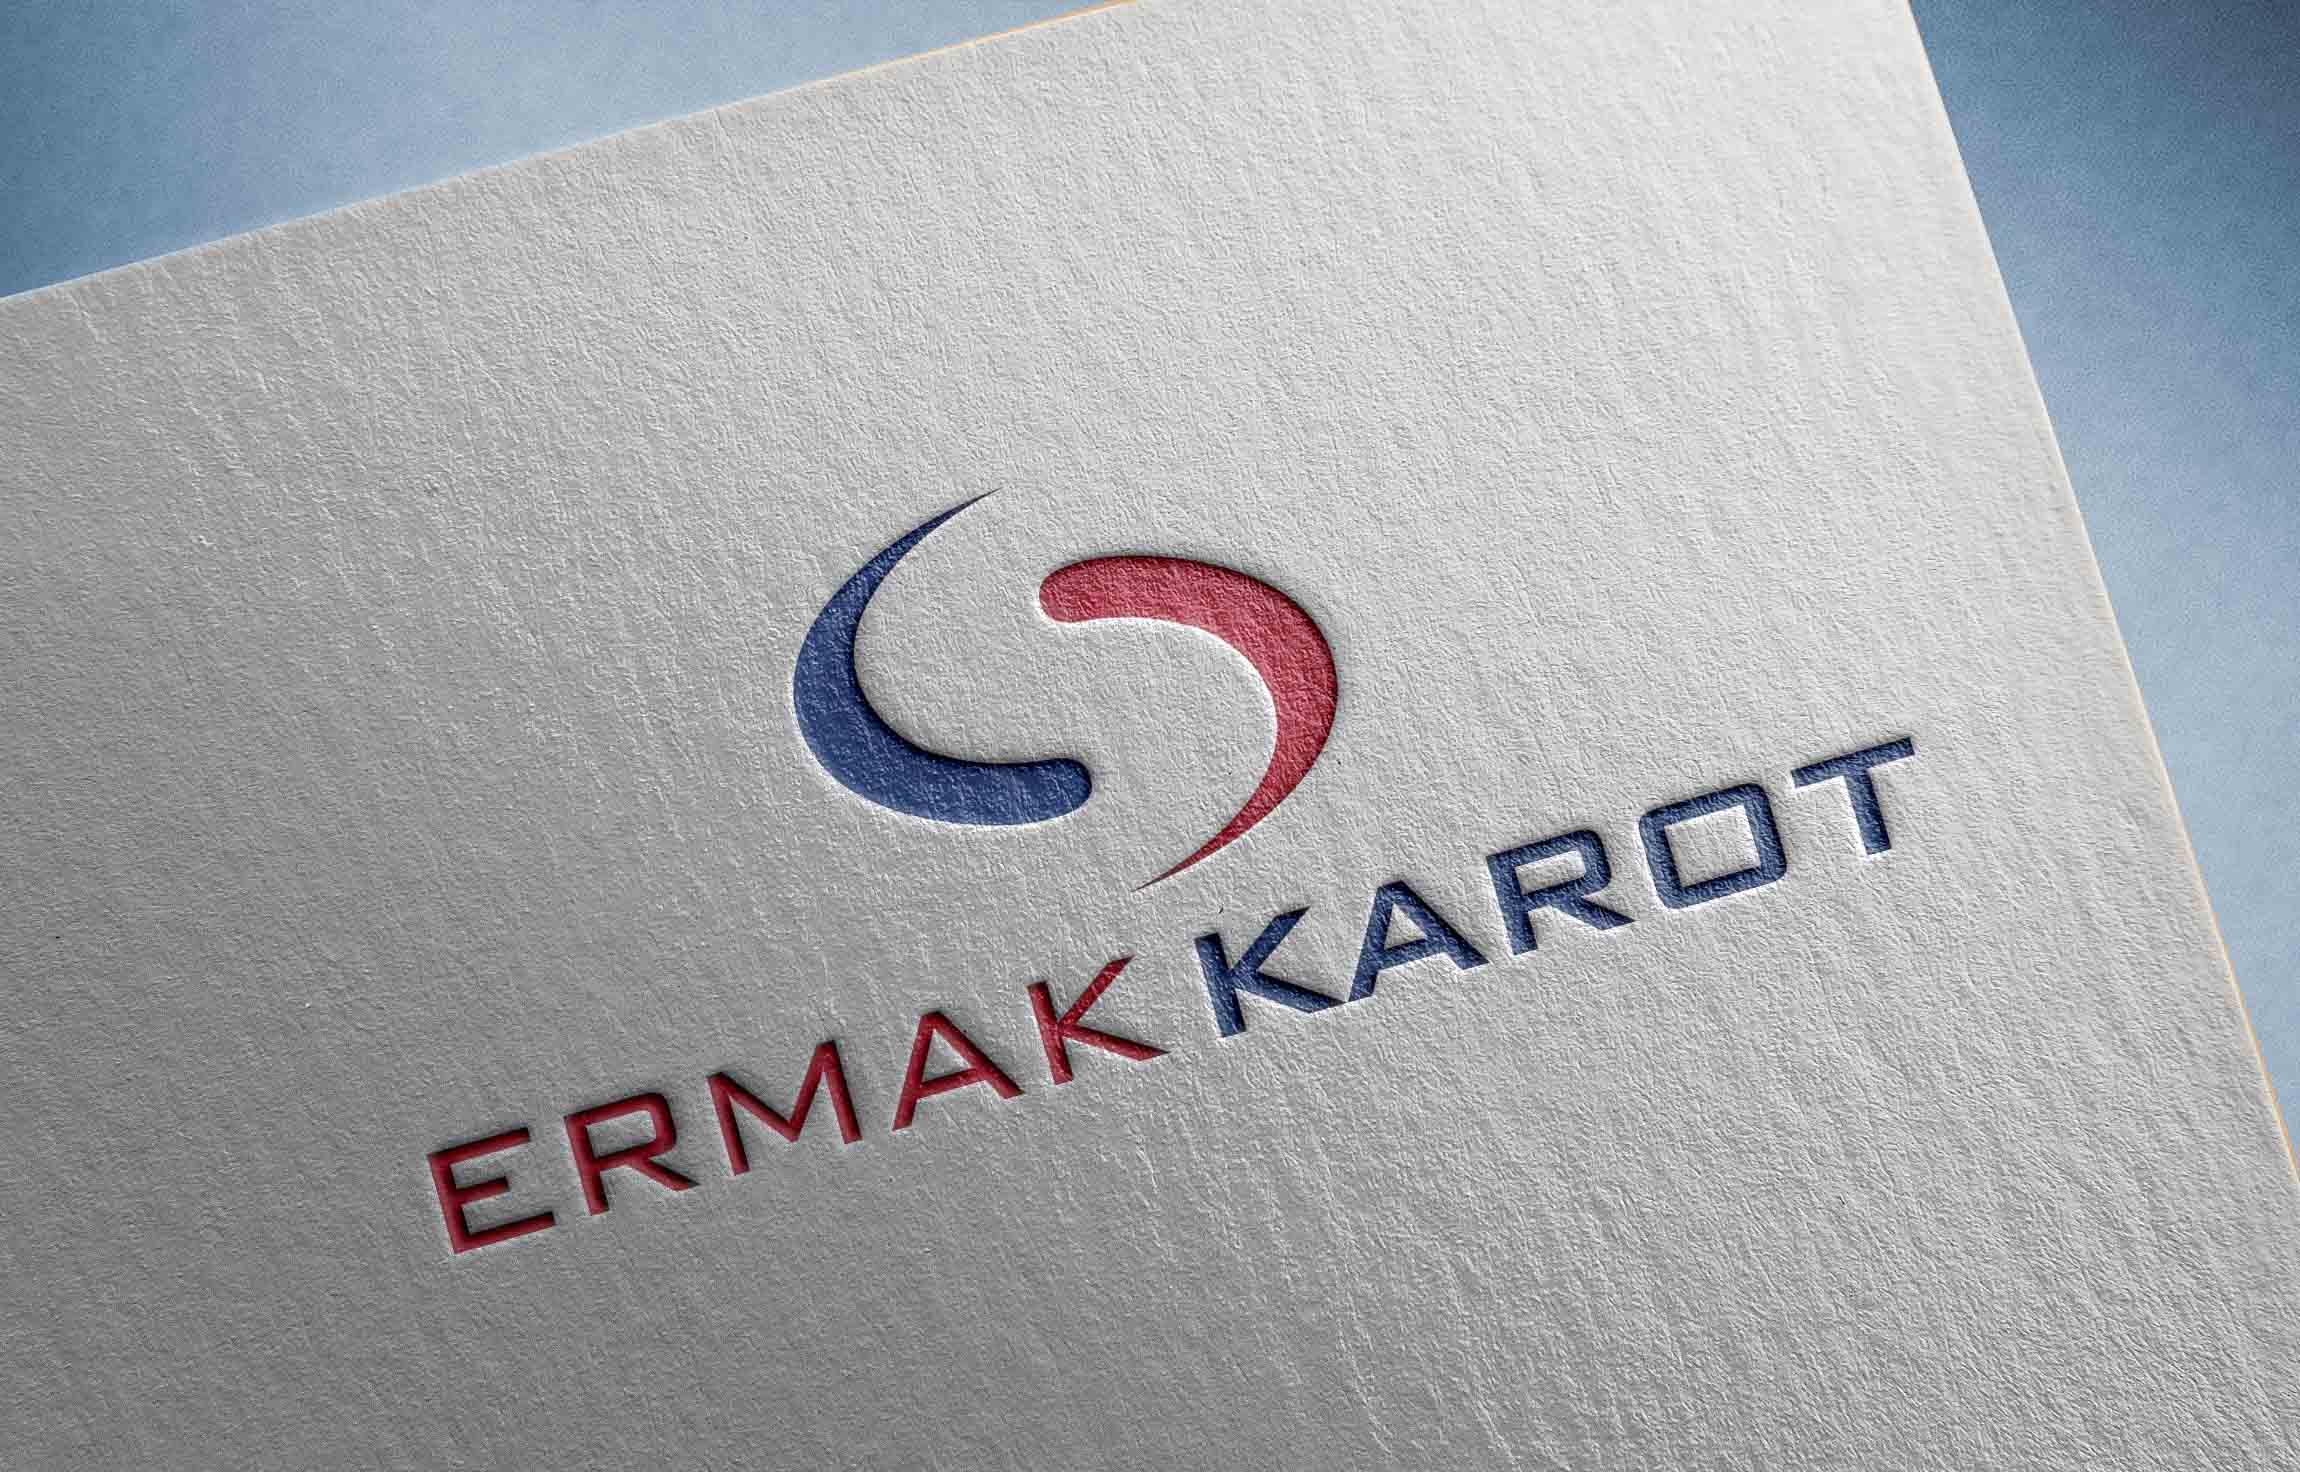 https://rdmedya.com/wp-content/uploads/2020/04/ermak-jarot-insaat-logo-web.jpg